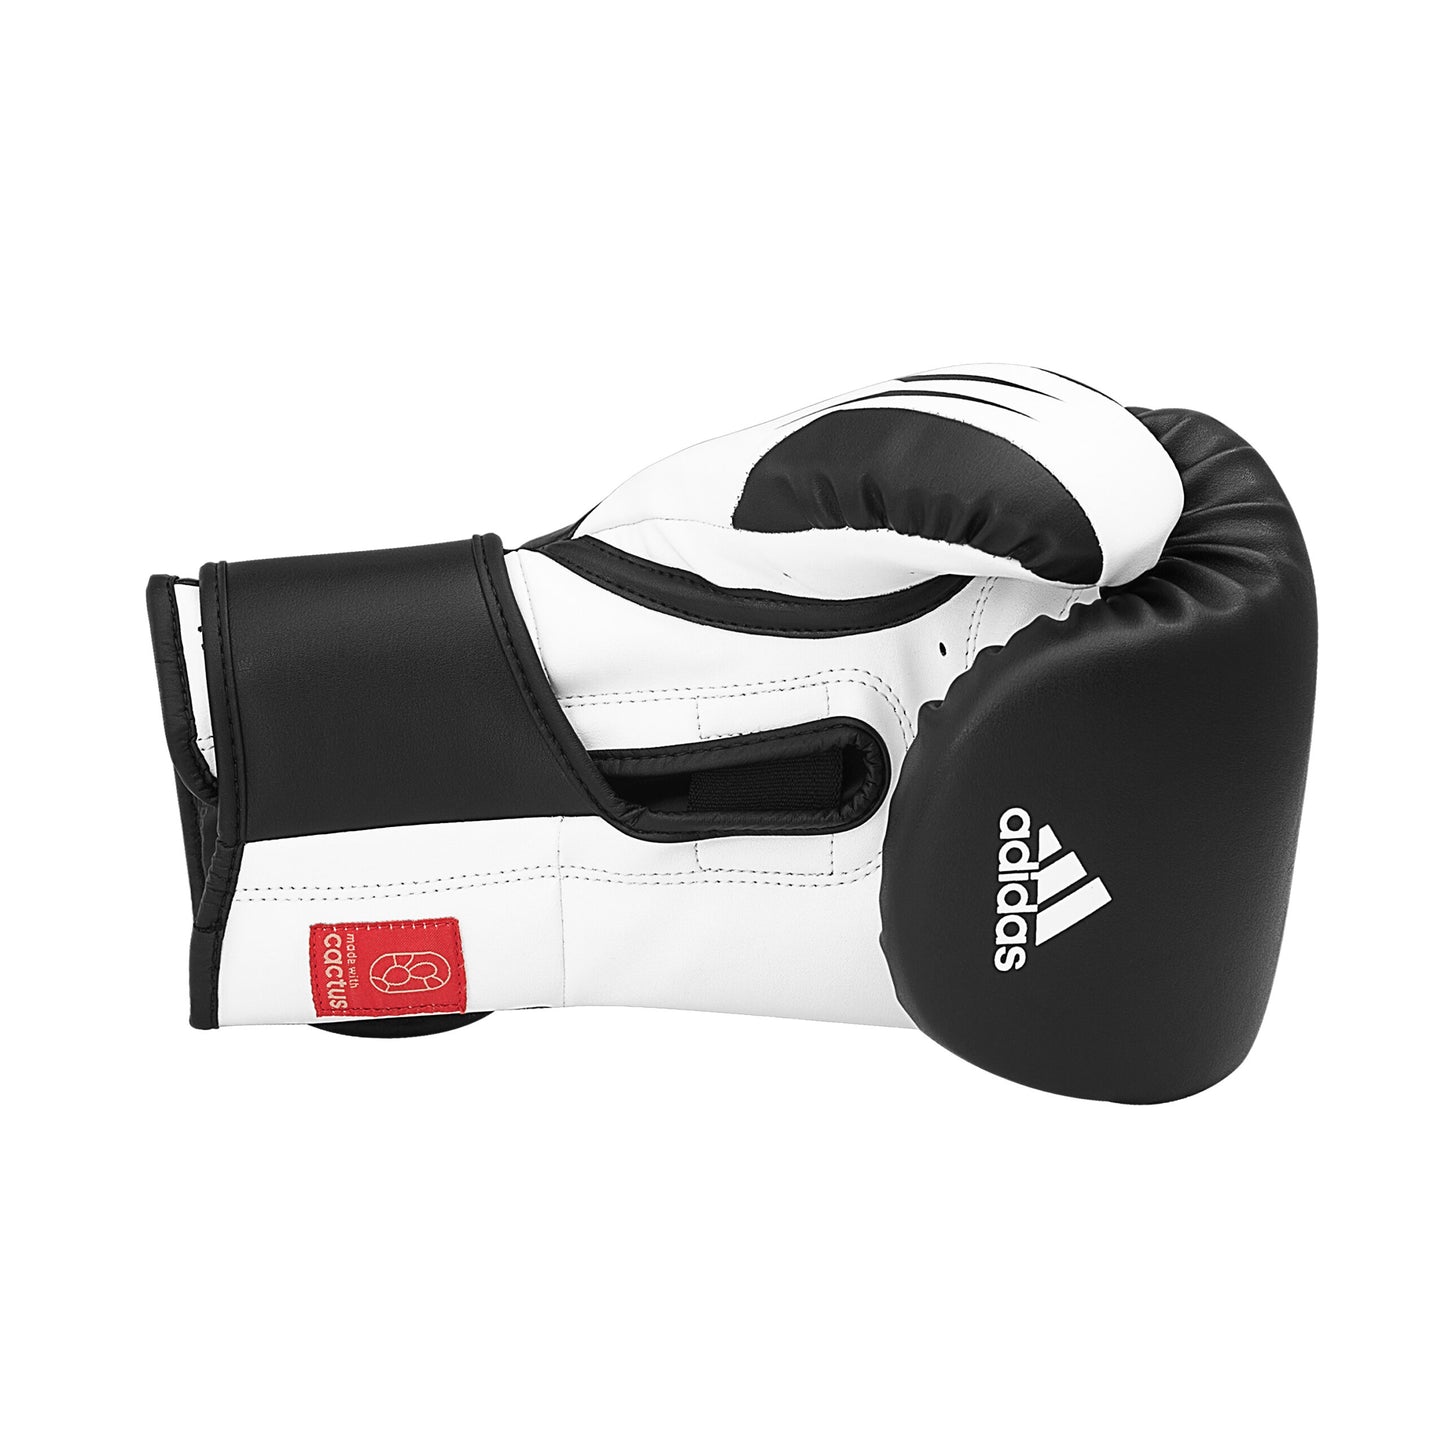 Adispd350tg Adidas Tilt 350 Pro Training Boxing Glove Strap Black White 03